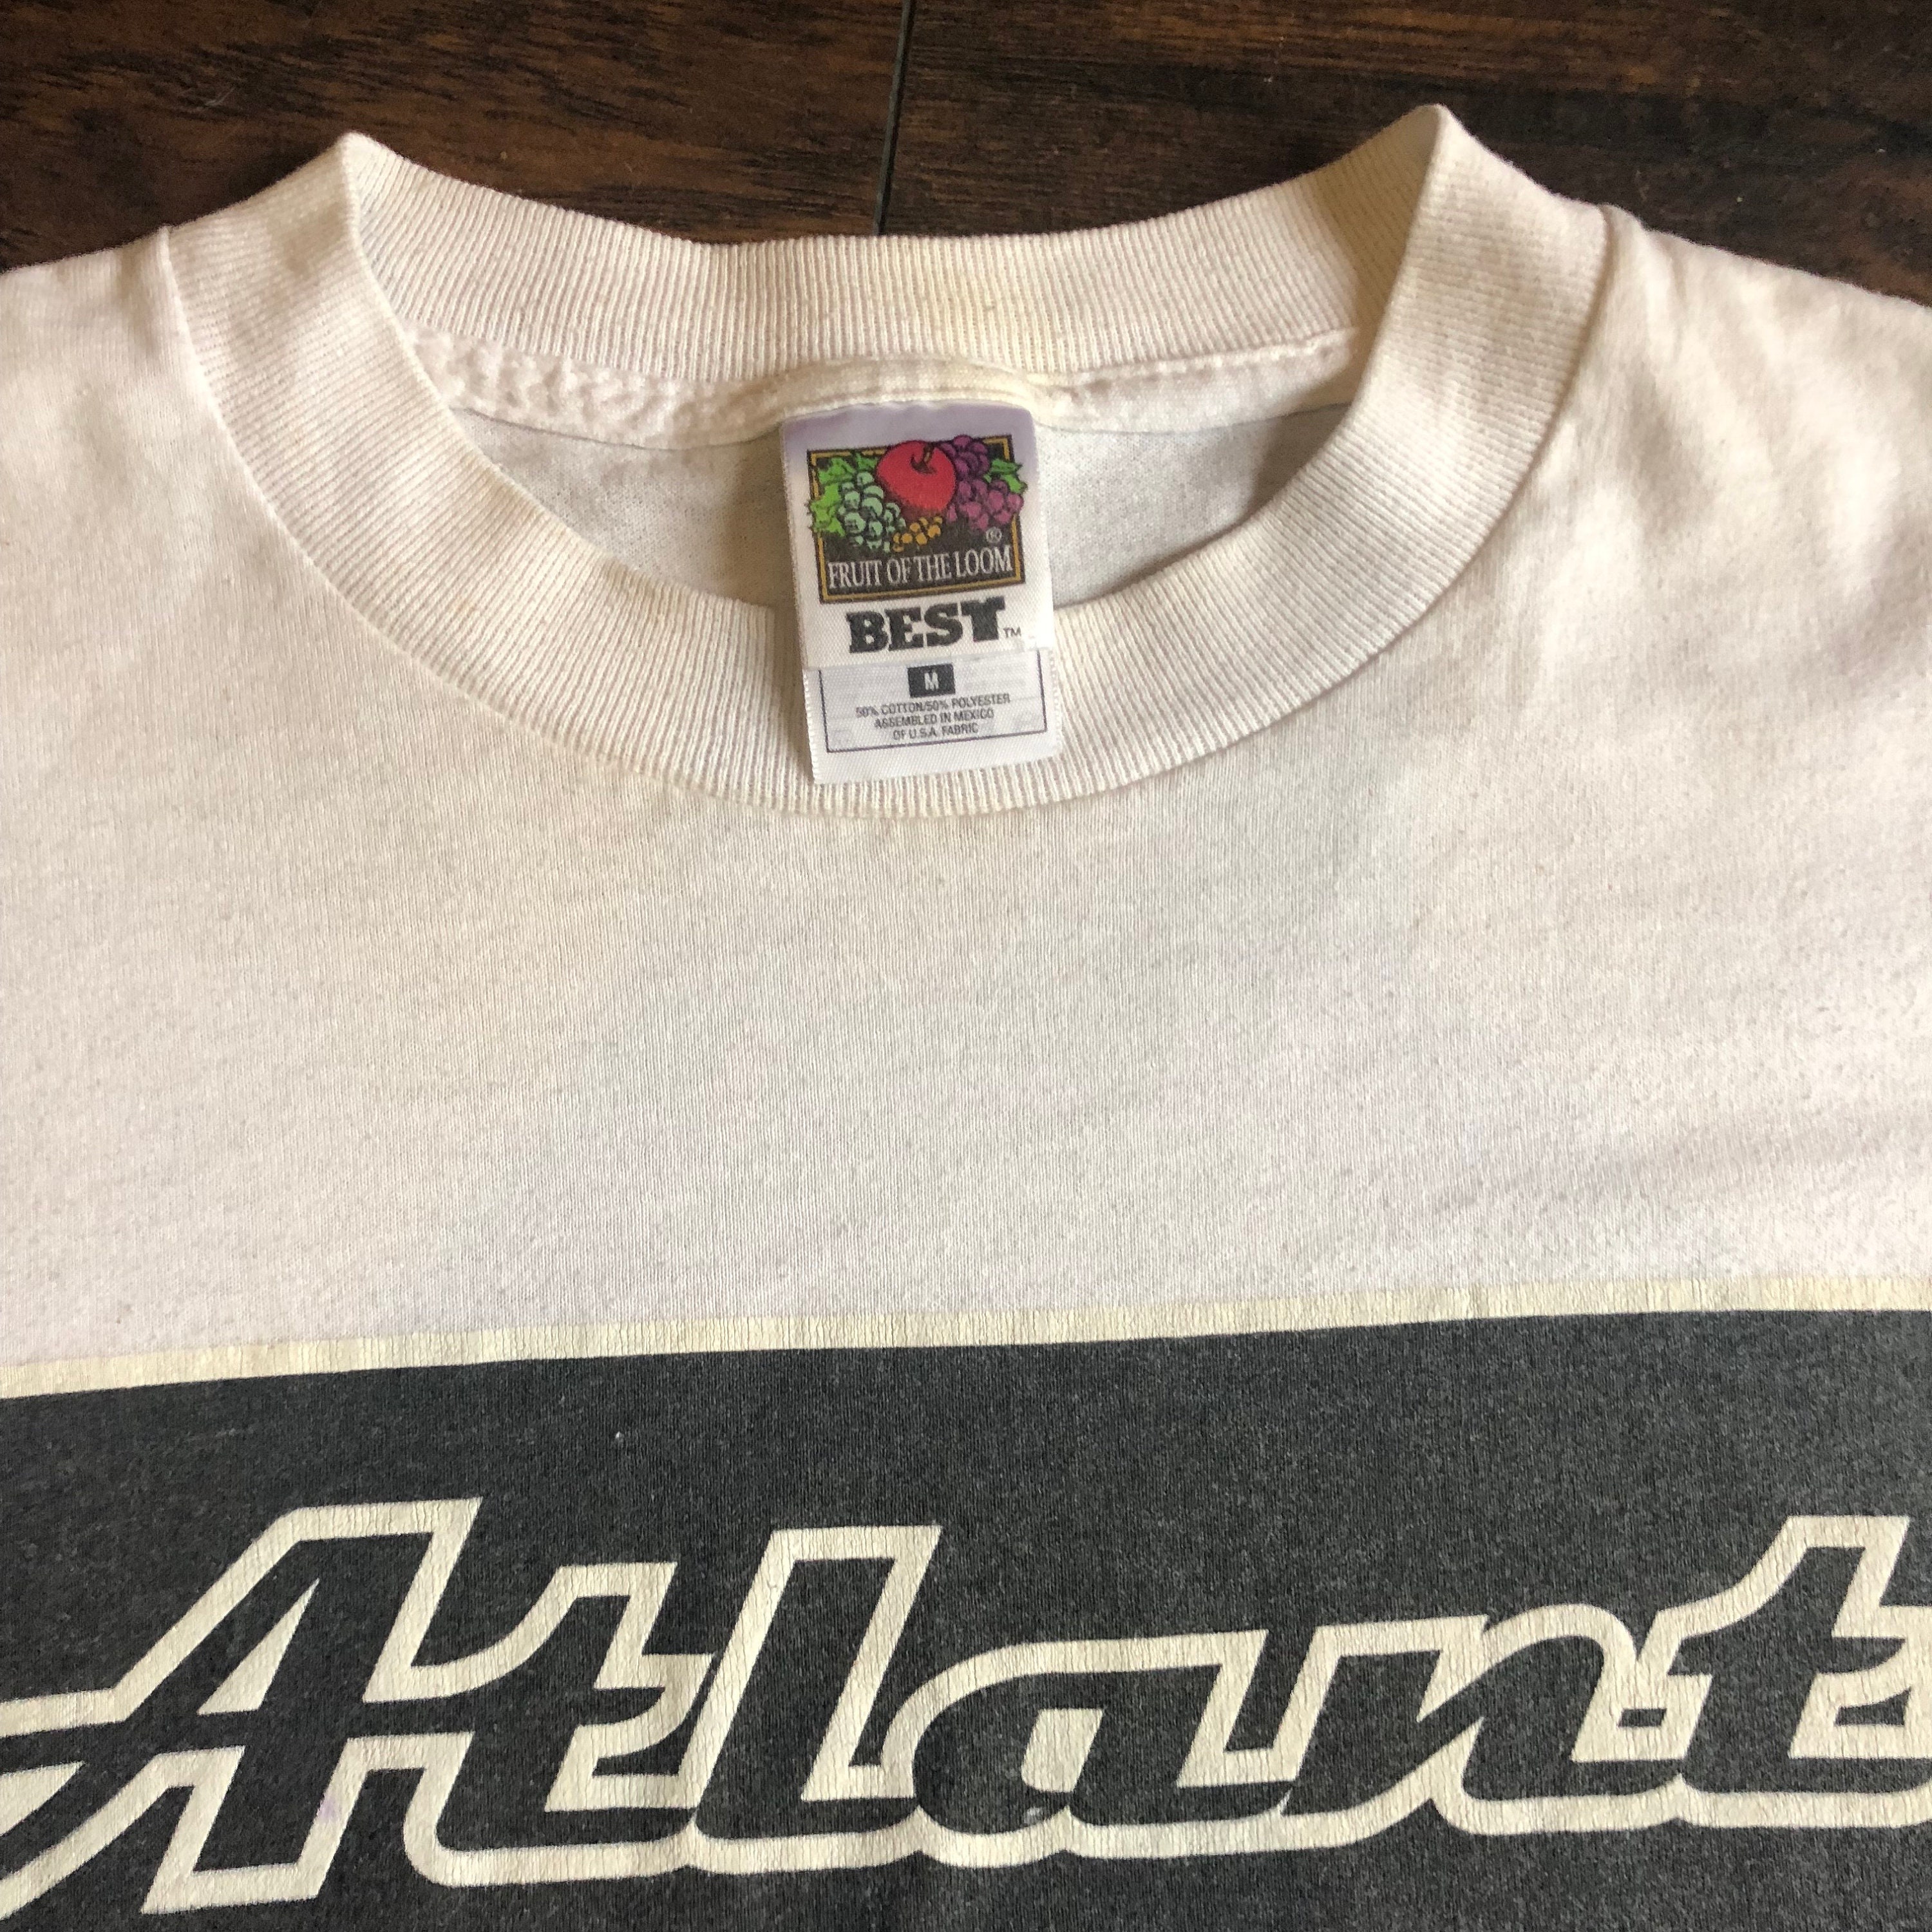 Vintage 1980s-1990s Atlanta souvenir style graphic t shirt unisex Medium